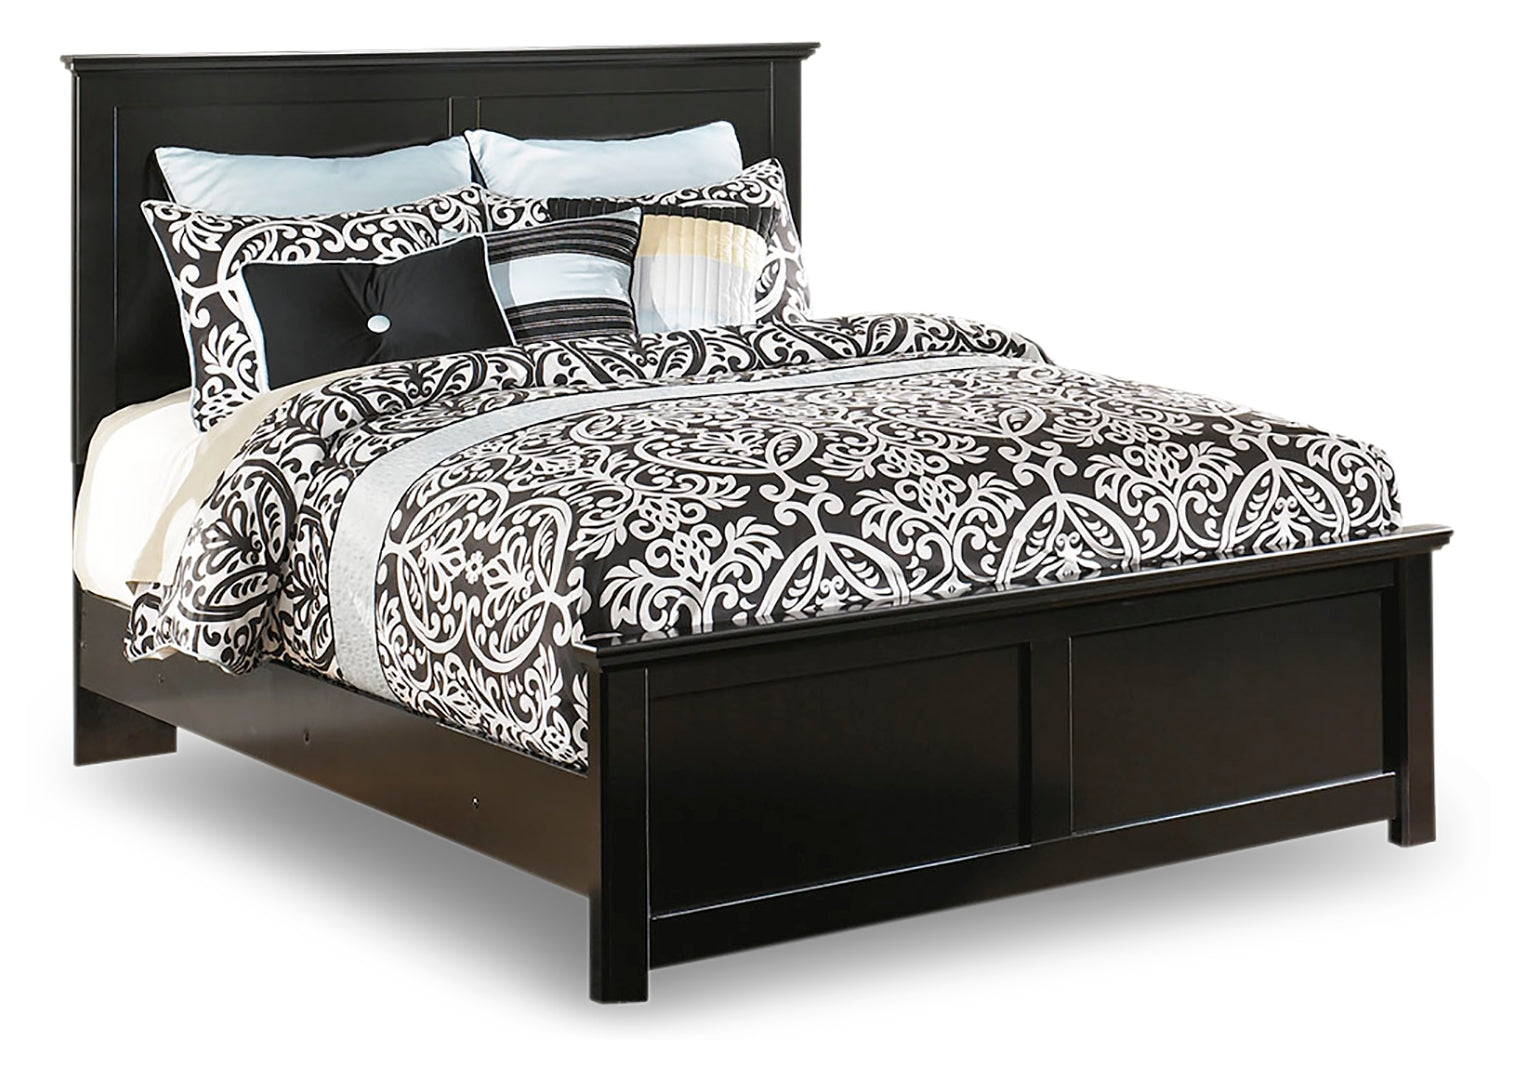 Maribel King Panel Bed with Dresser